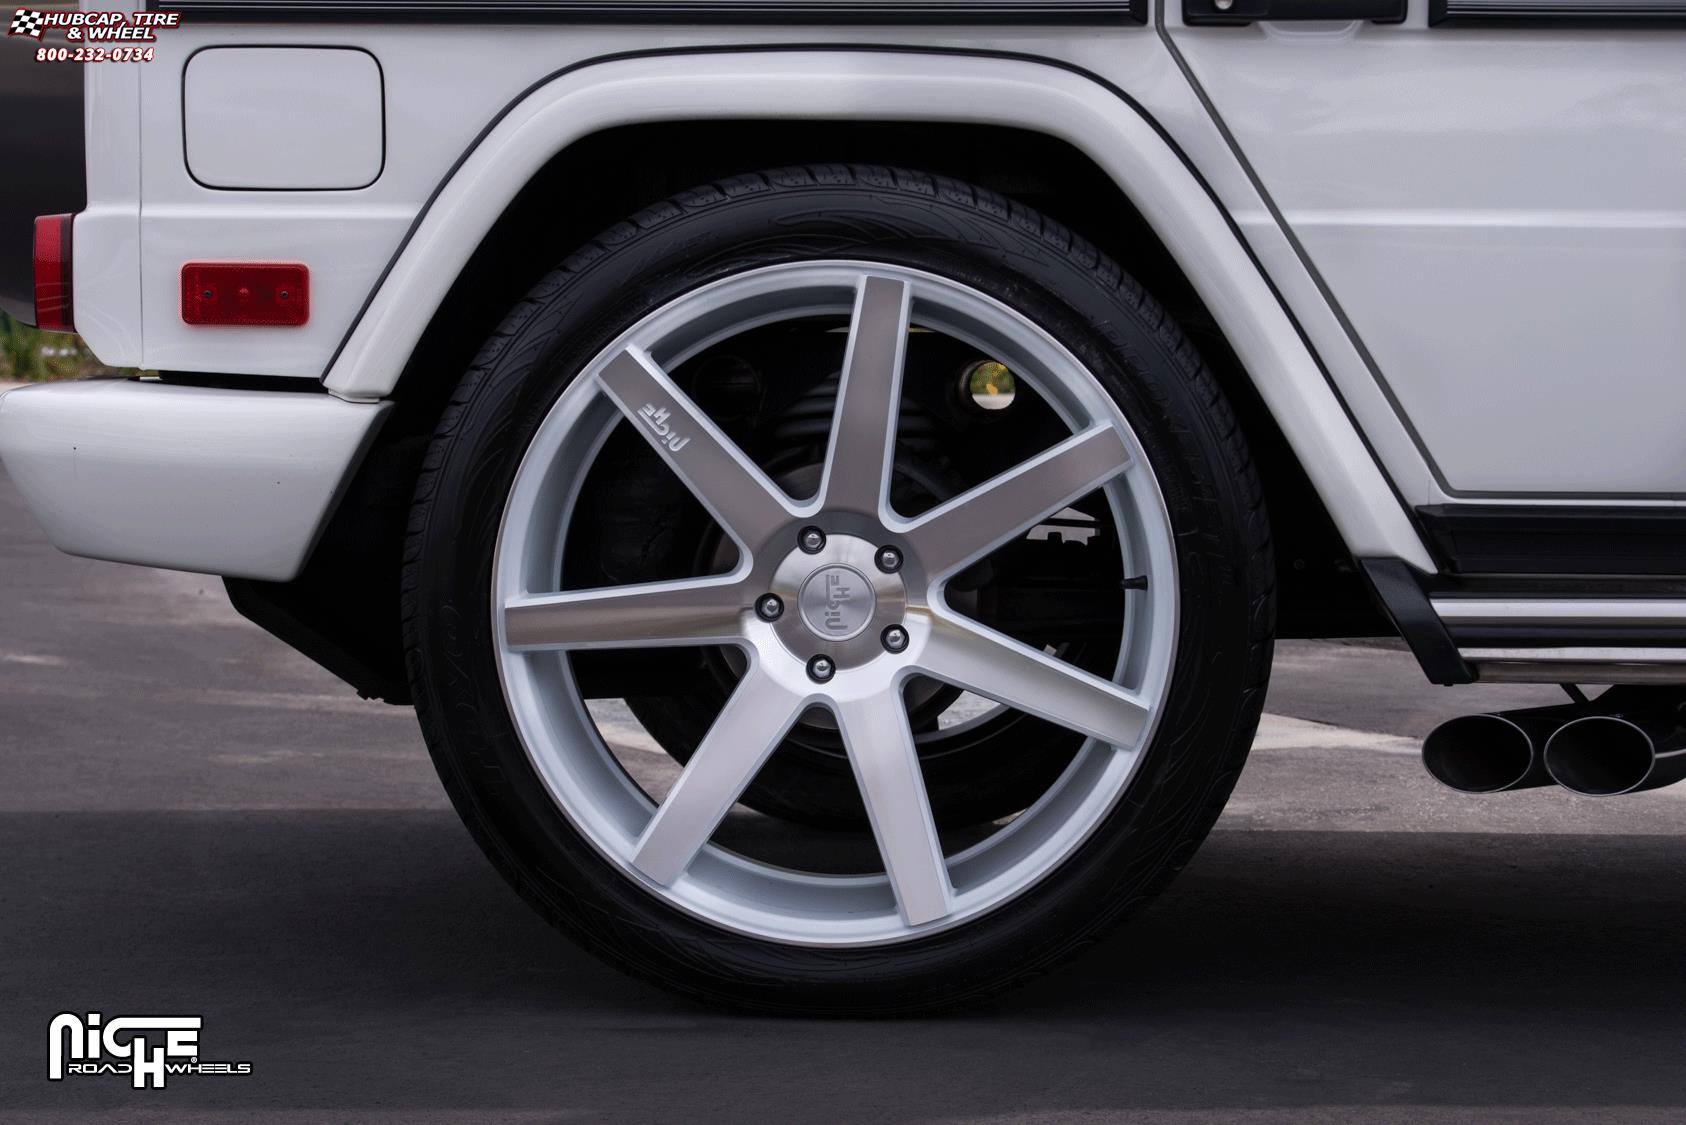 vehicle gallery/mercedes benz g550 niche verona m151  Gloss White & Machined wheels and rims